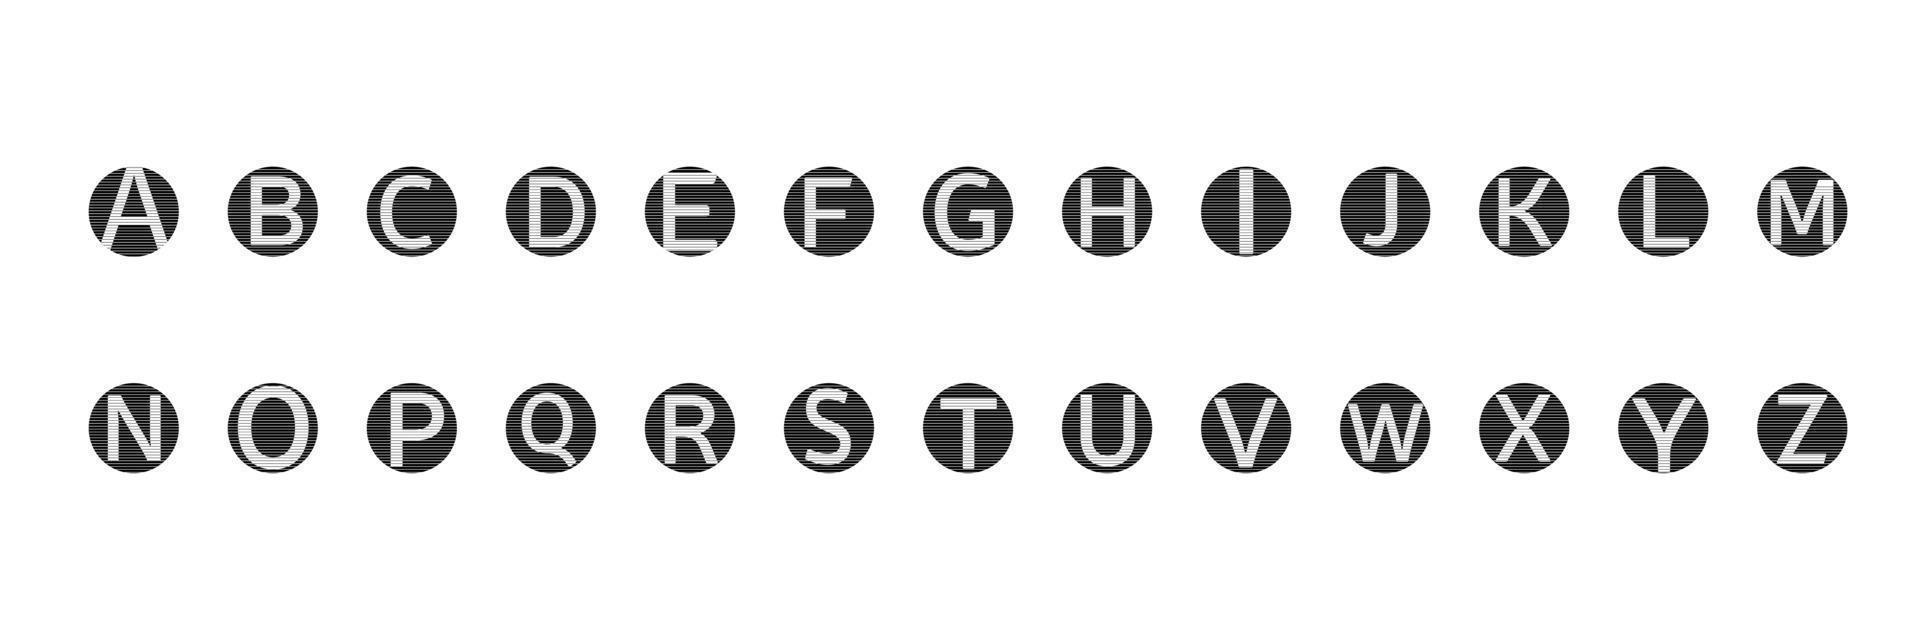 letras do alfabeto inglês símbolos ícones sinais simples conjunto colorido preto e branco. um conjunto de ícones de letras do alfabeto inglês, liso, preto e branco principalmente preto. vetor